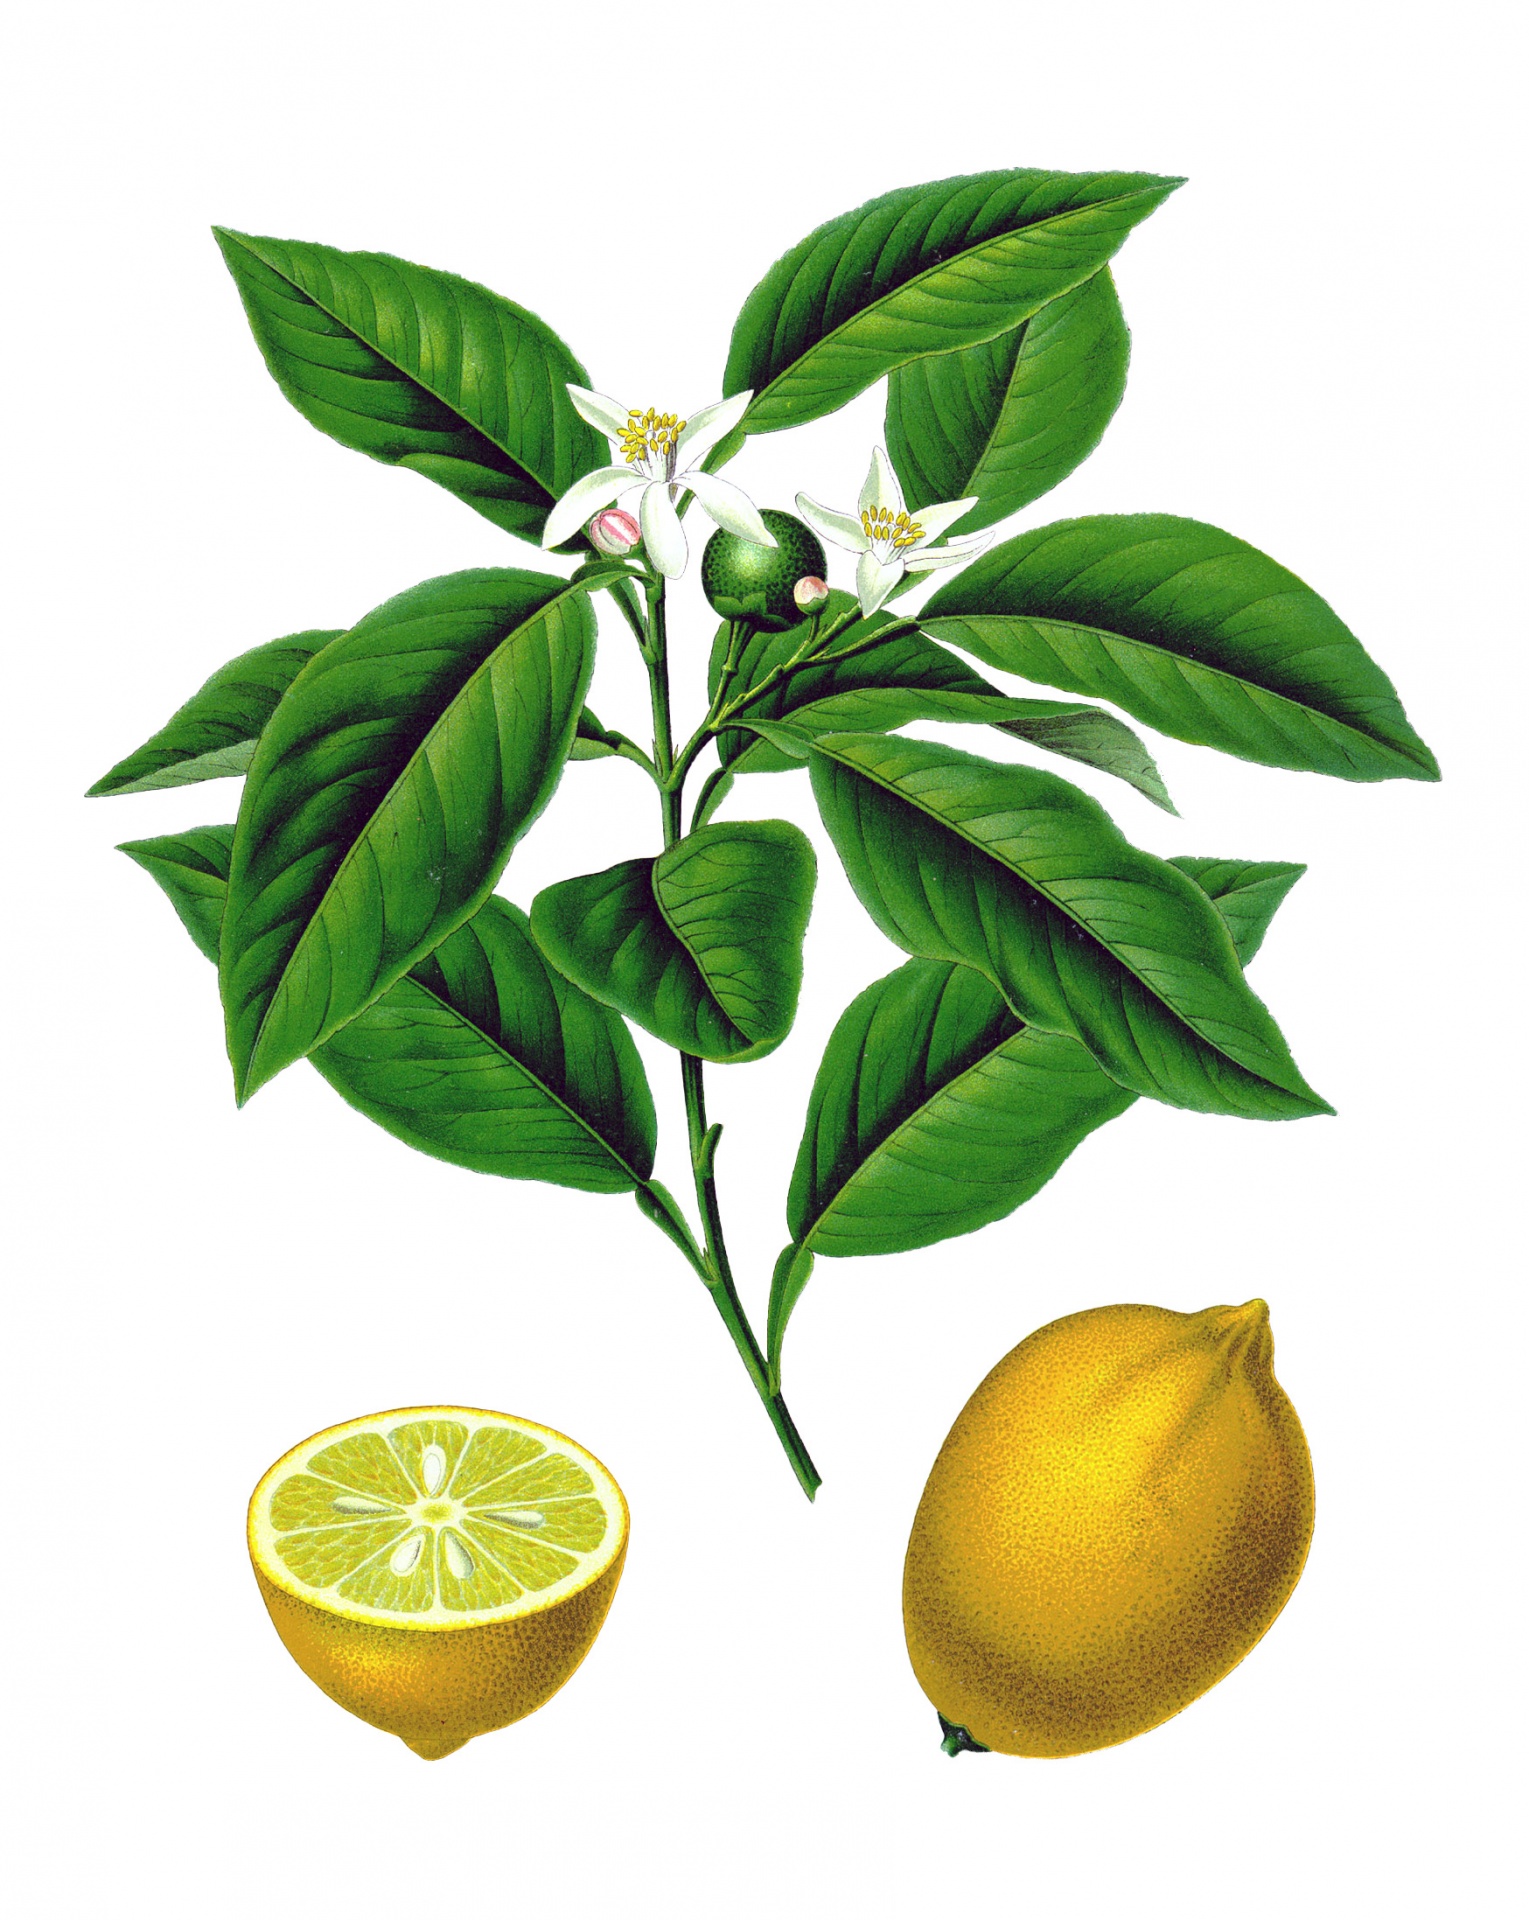 Lemon Fruit Vintage Art